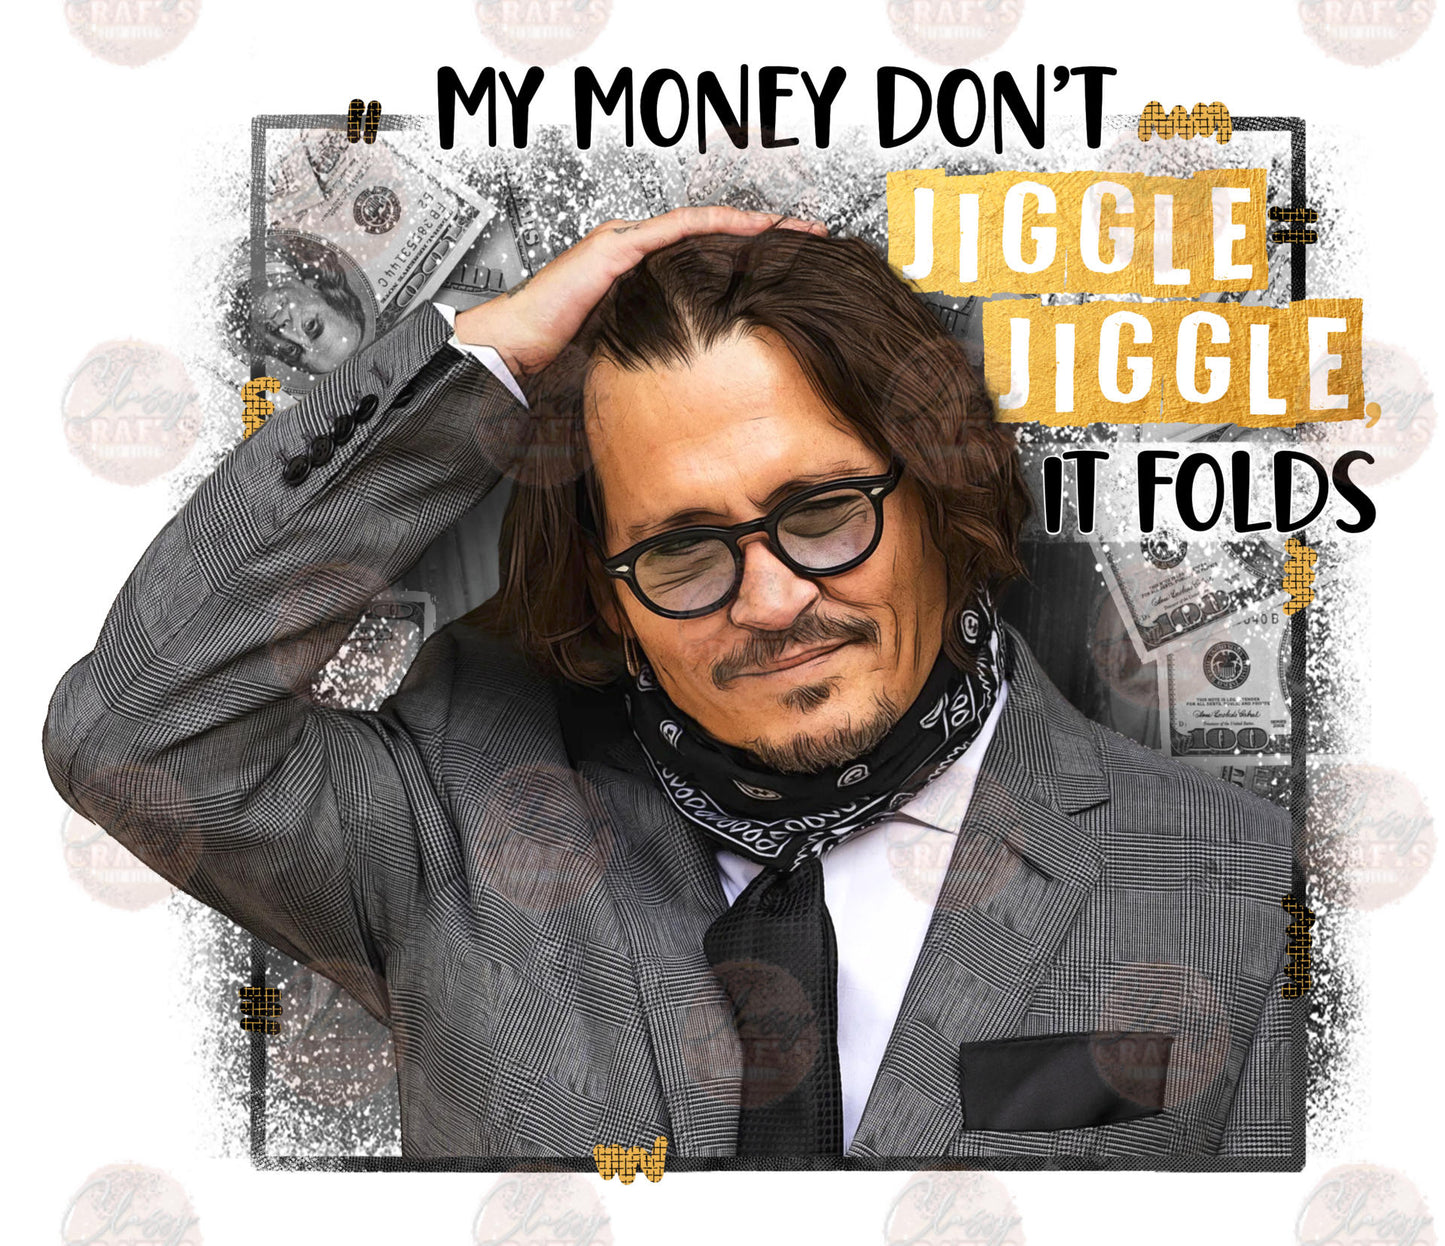 My Money Don't Jiggle Jiggle/ Gold - Sublimation Transfer